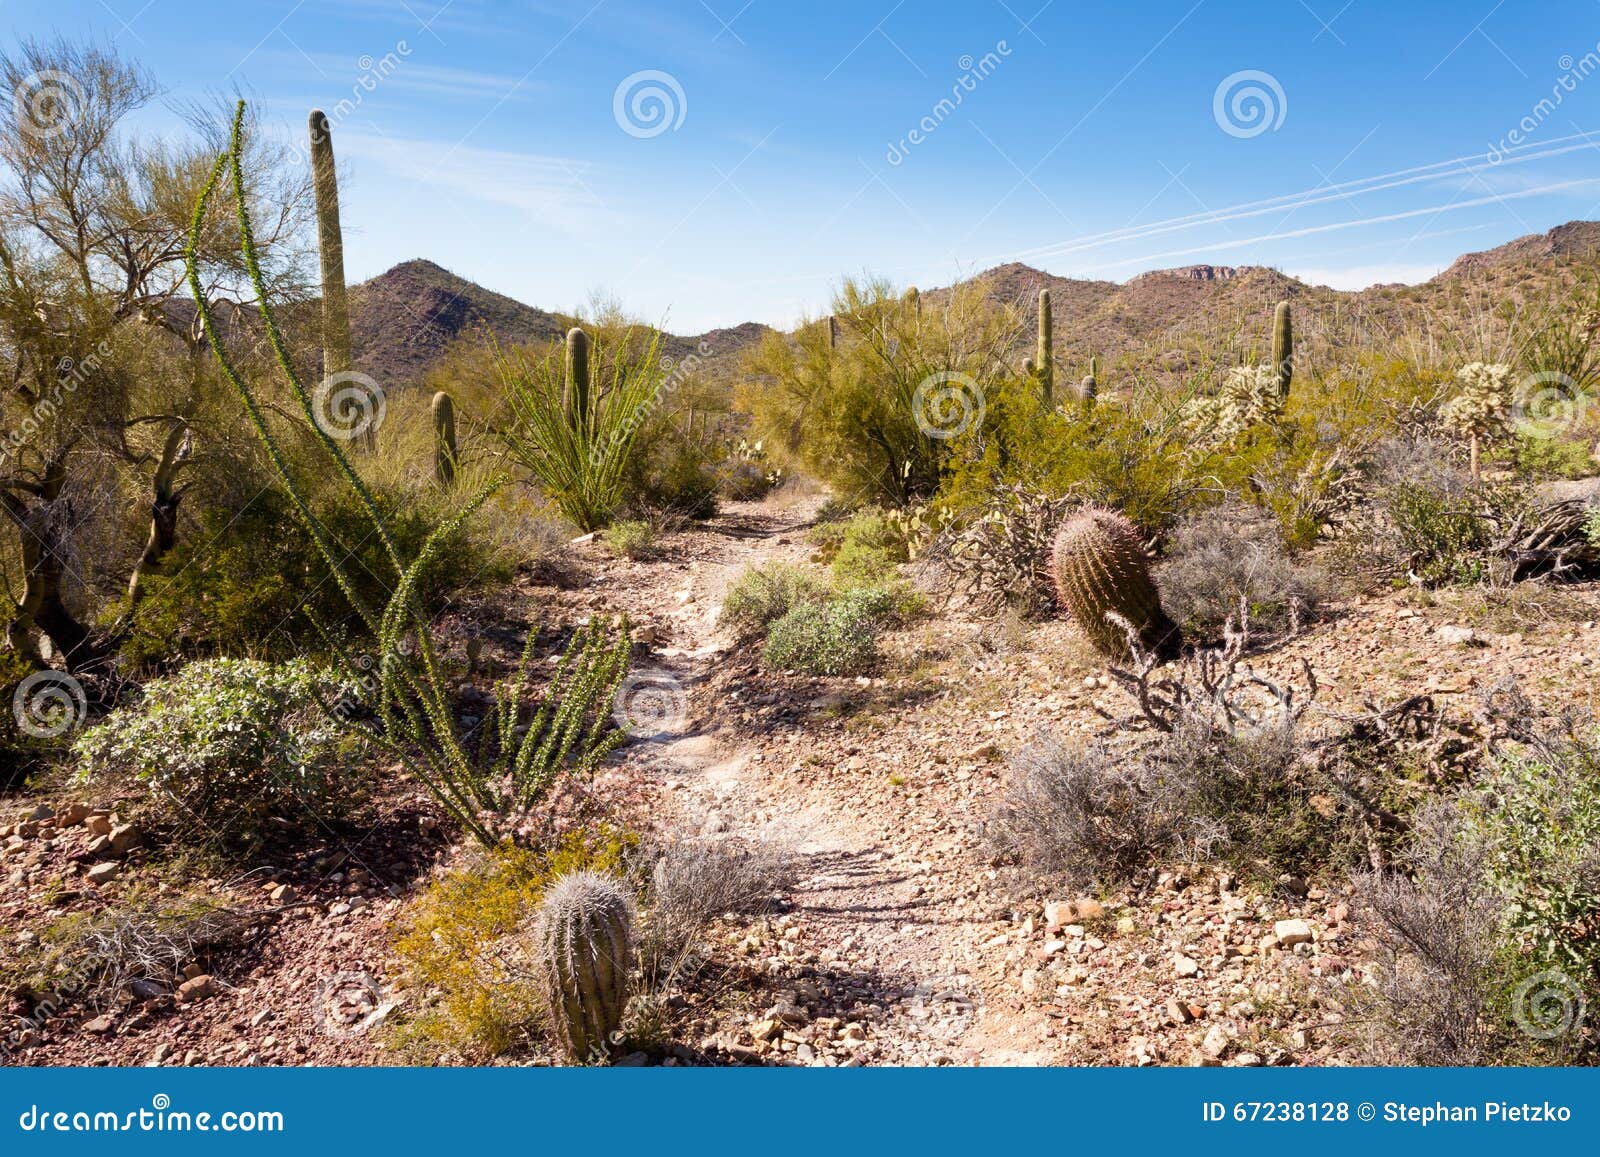 desert trail in saguaro np near tucson arizona us